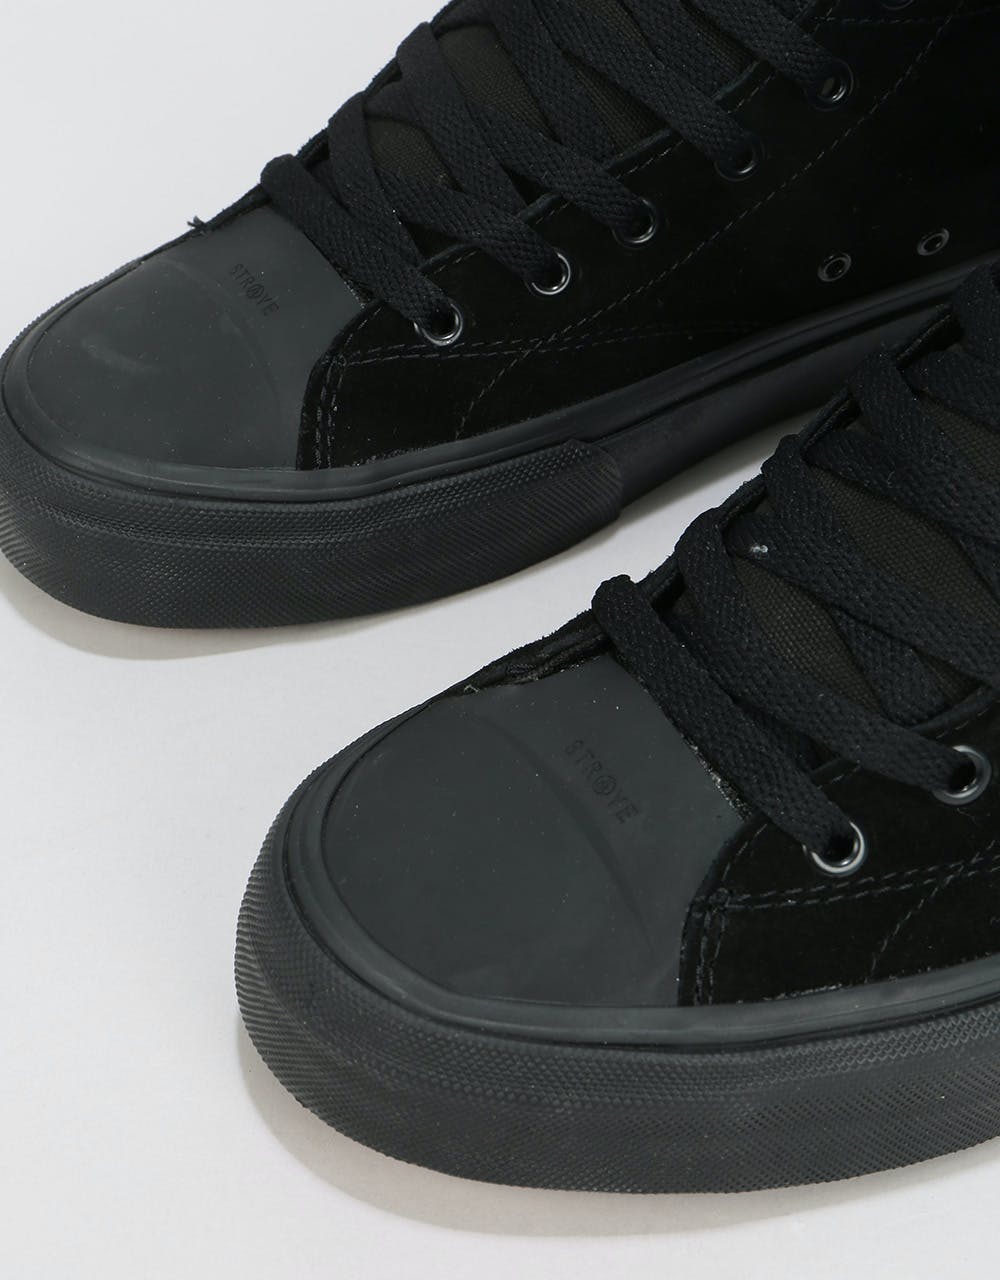 Straye Venice High Skate Shoes - Black/Black Suede